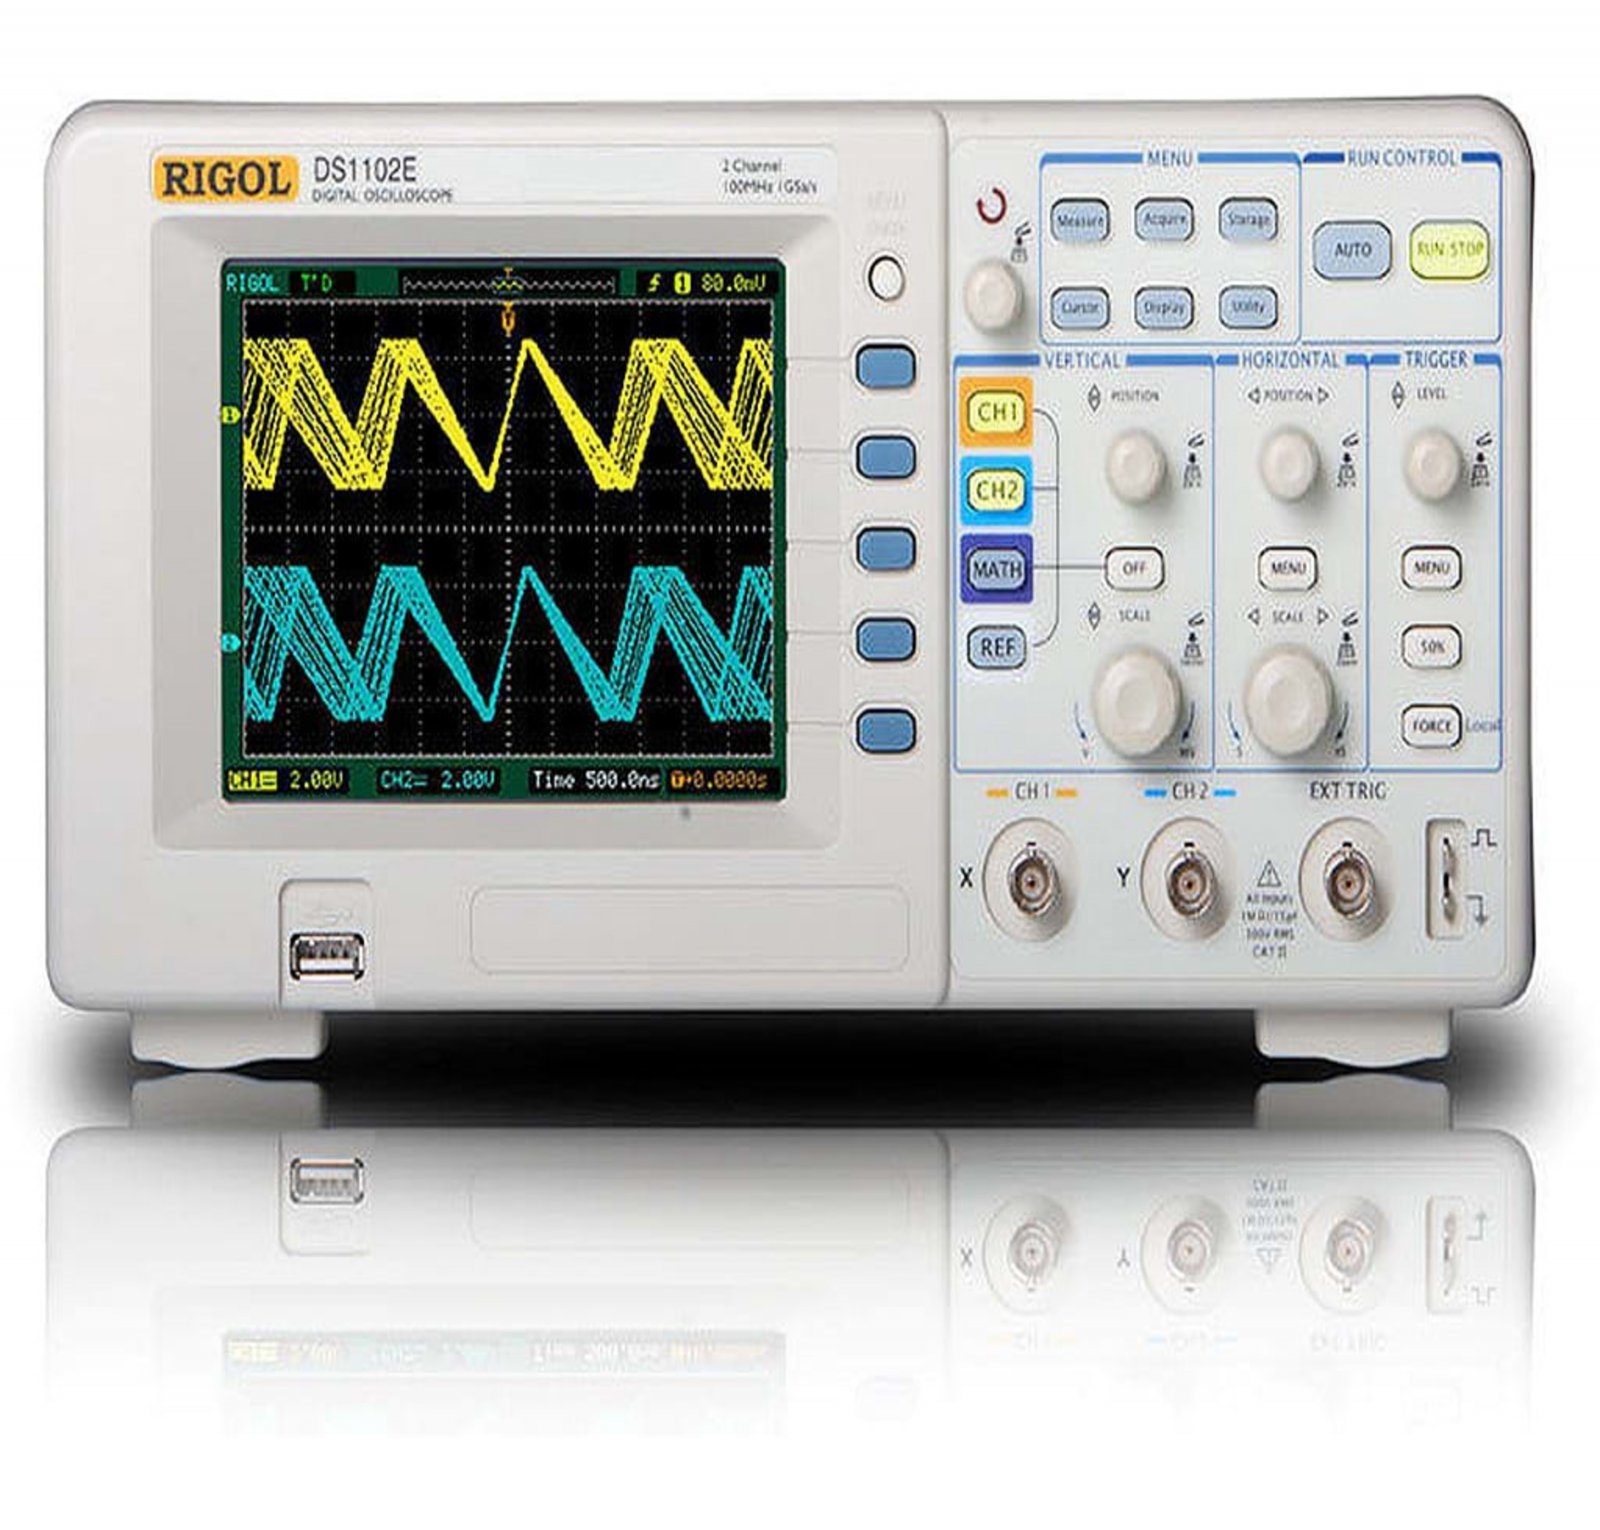 rigol digital oscilloscope (1000 series)